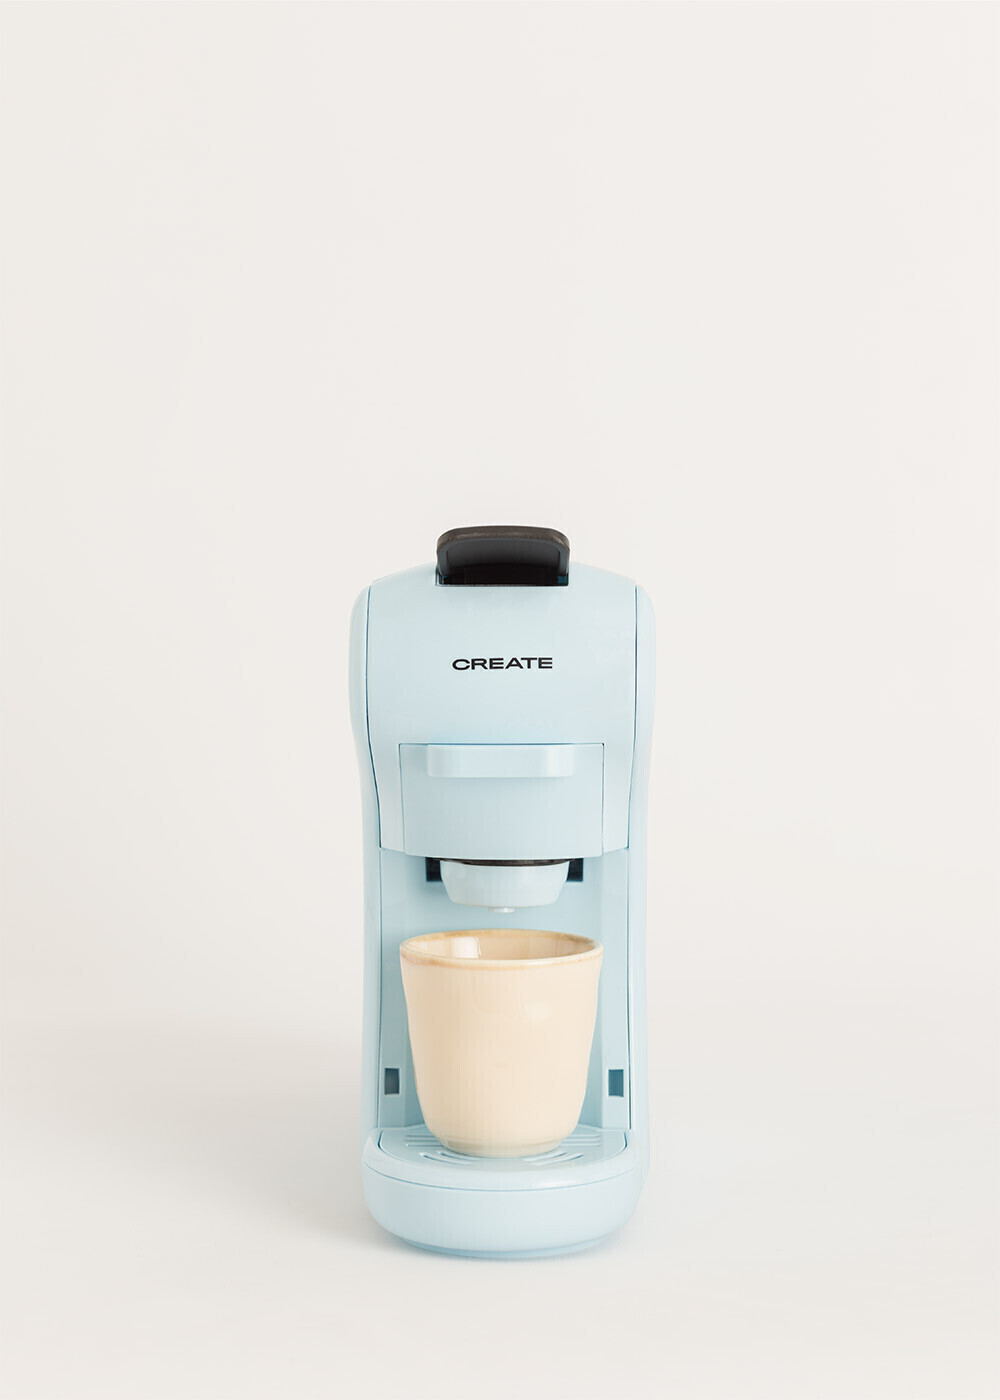 POTTS - Machine à café multi-dosettes et café moulu - Create